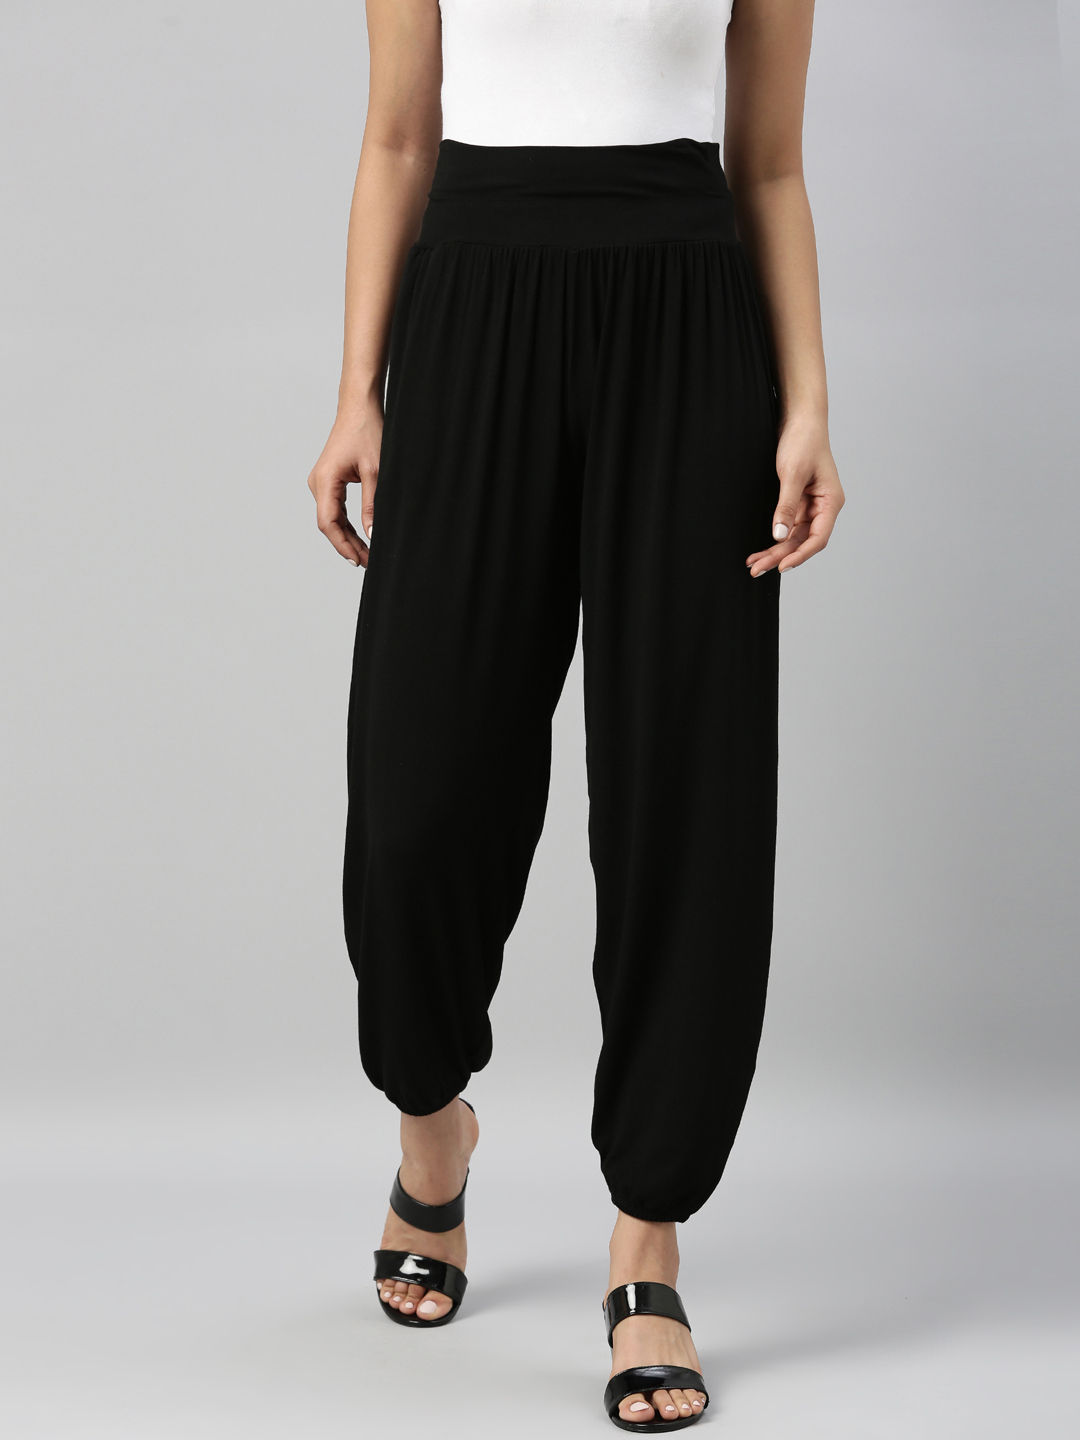 Buy HR0185 Aladdin Pants, Harem Pants 100% Cotton Harem Pants Unisex Low  Crotch Yoga Trousers Online in India - Etsy